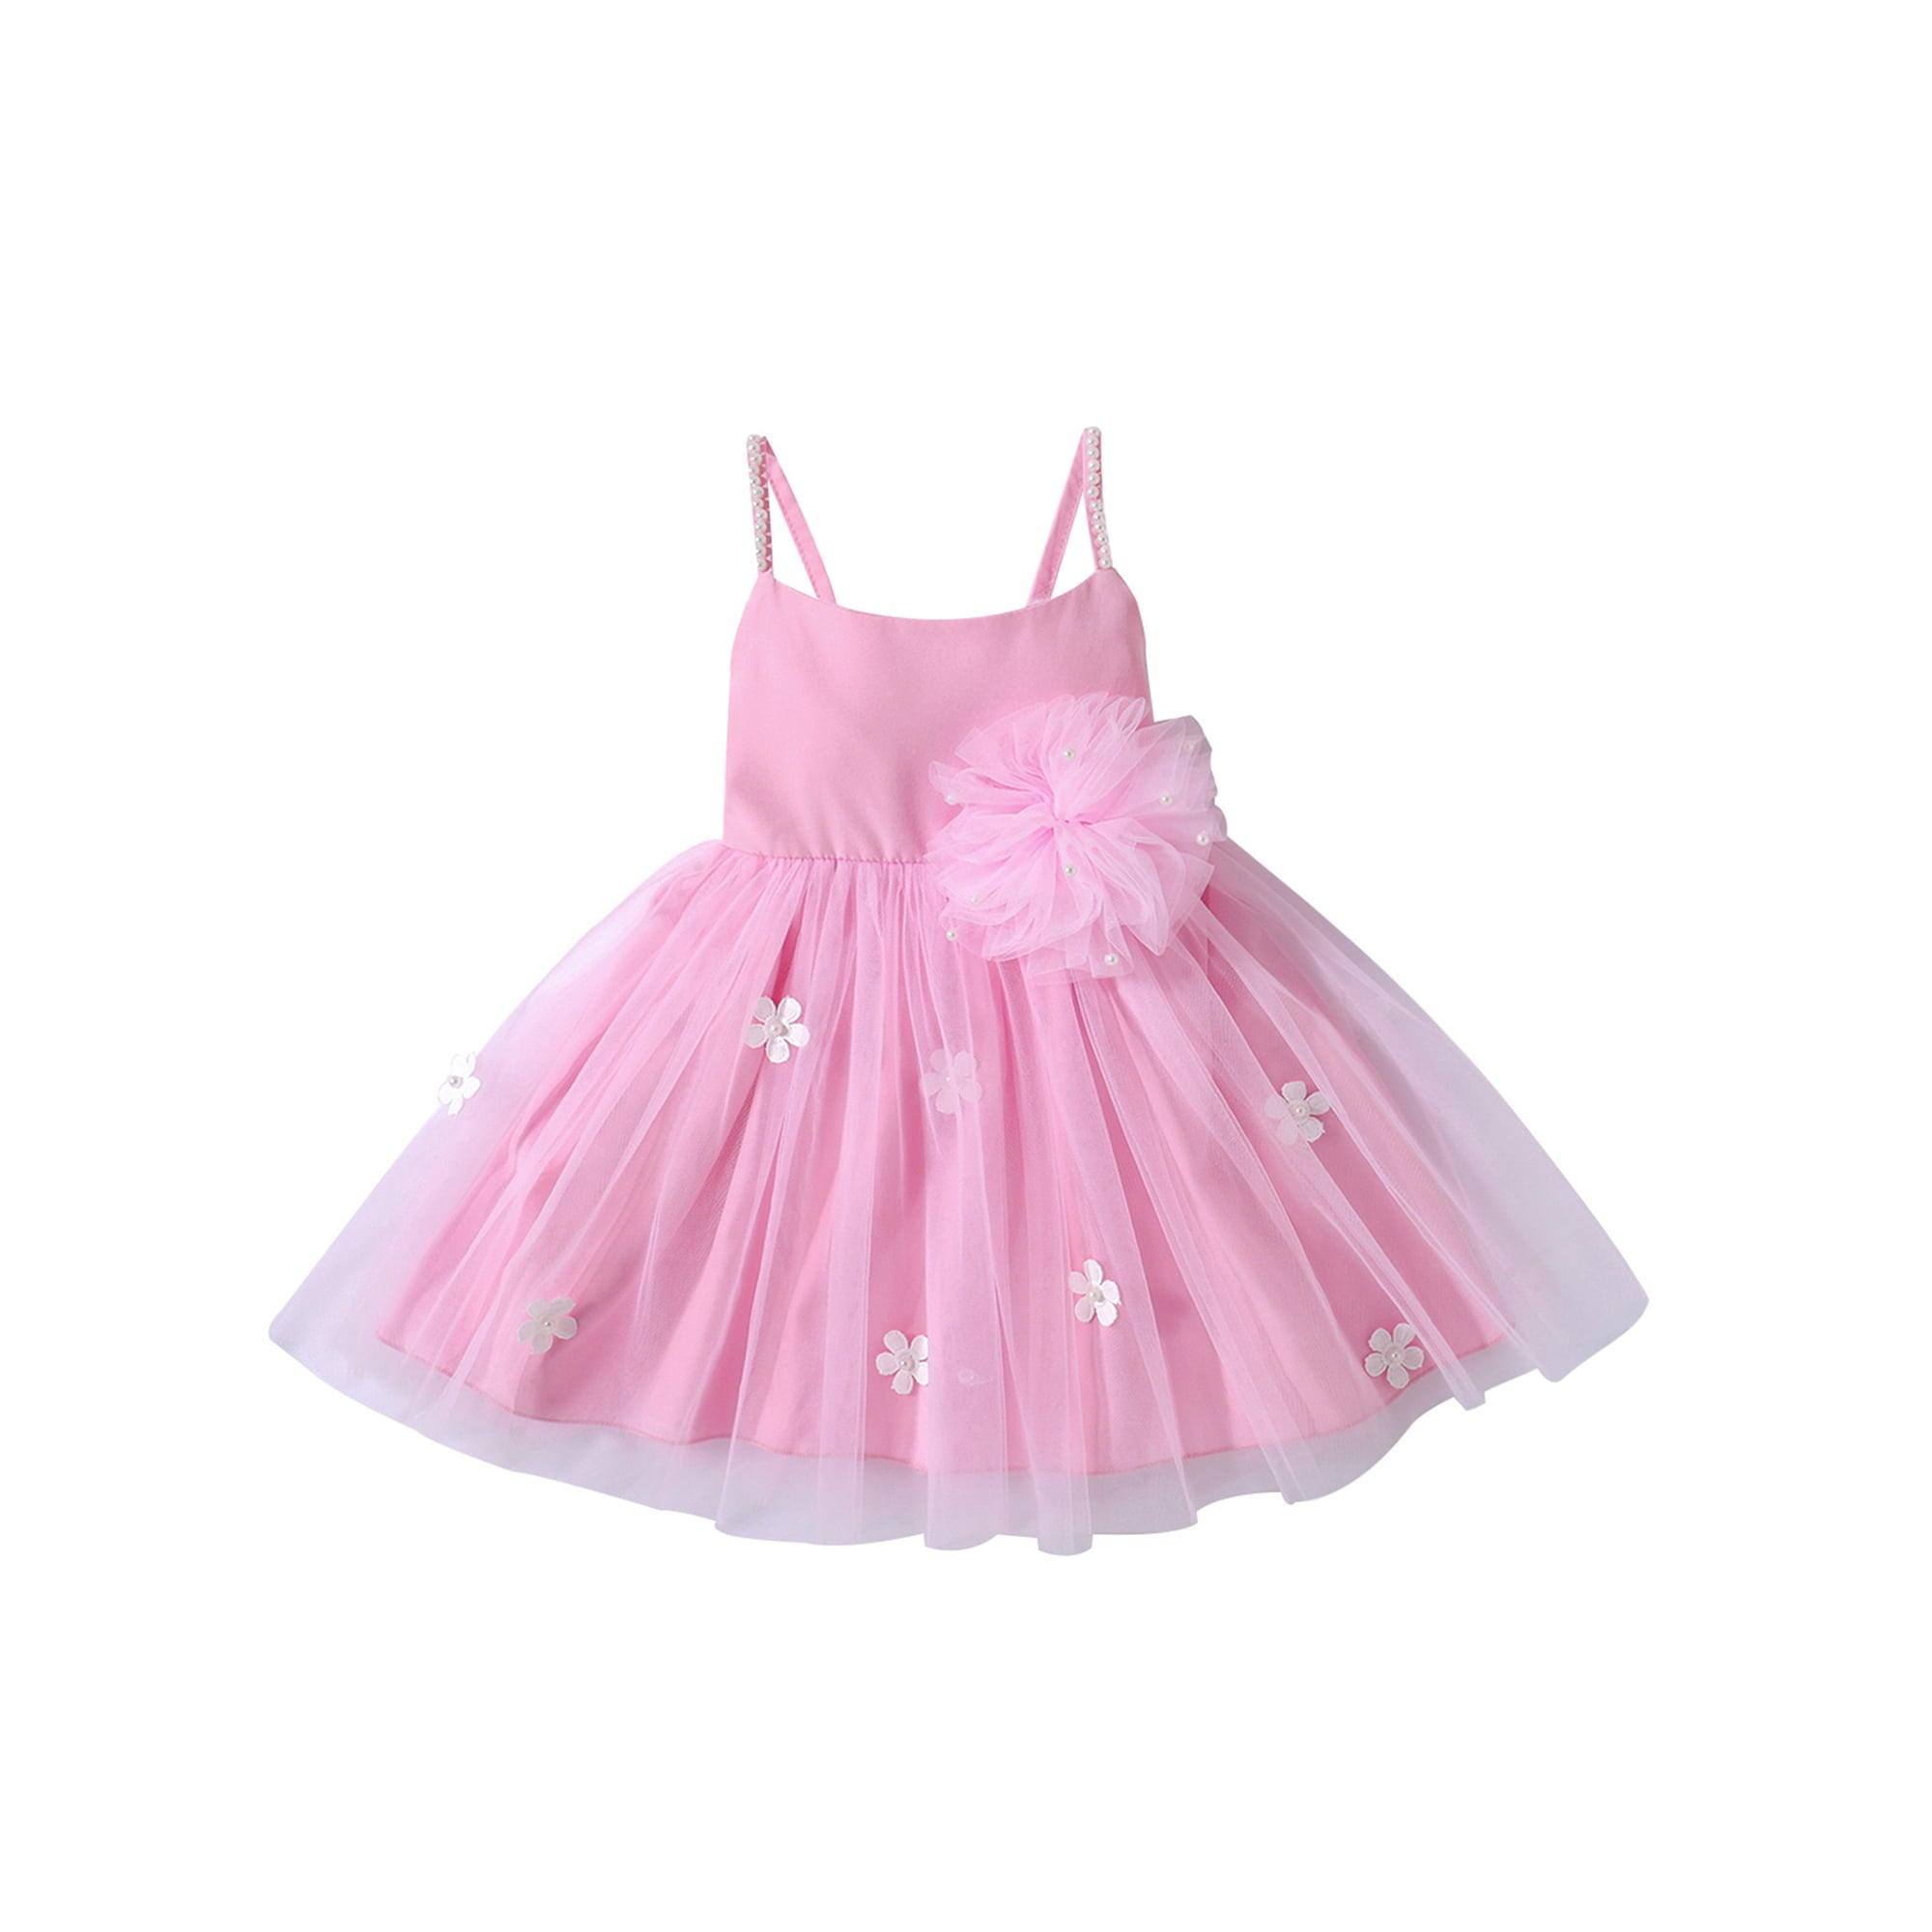 Enaguas de niña de tul rosa, vestido de tutú de princesa para niñas, enaguas  de niña de flores, enaguas cortas para niñas, vestido de enaguas para niñas  -  México